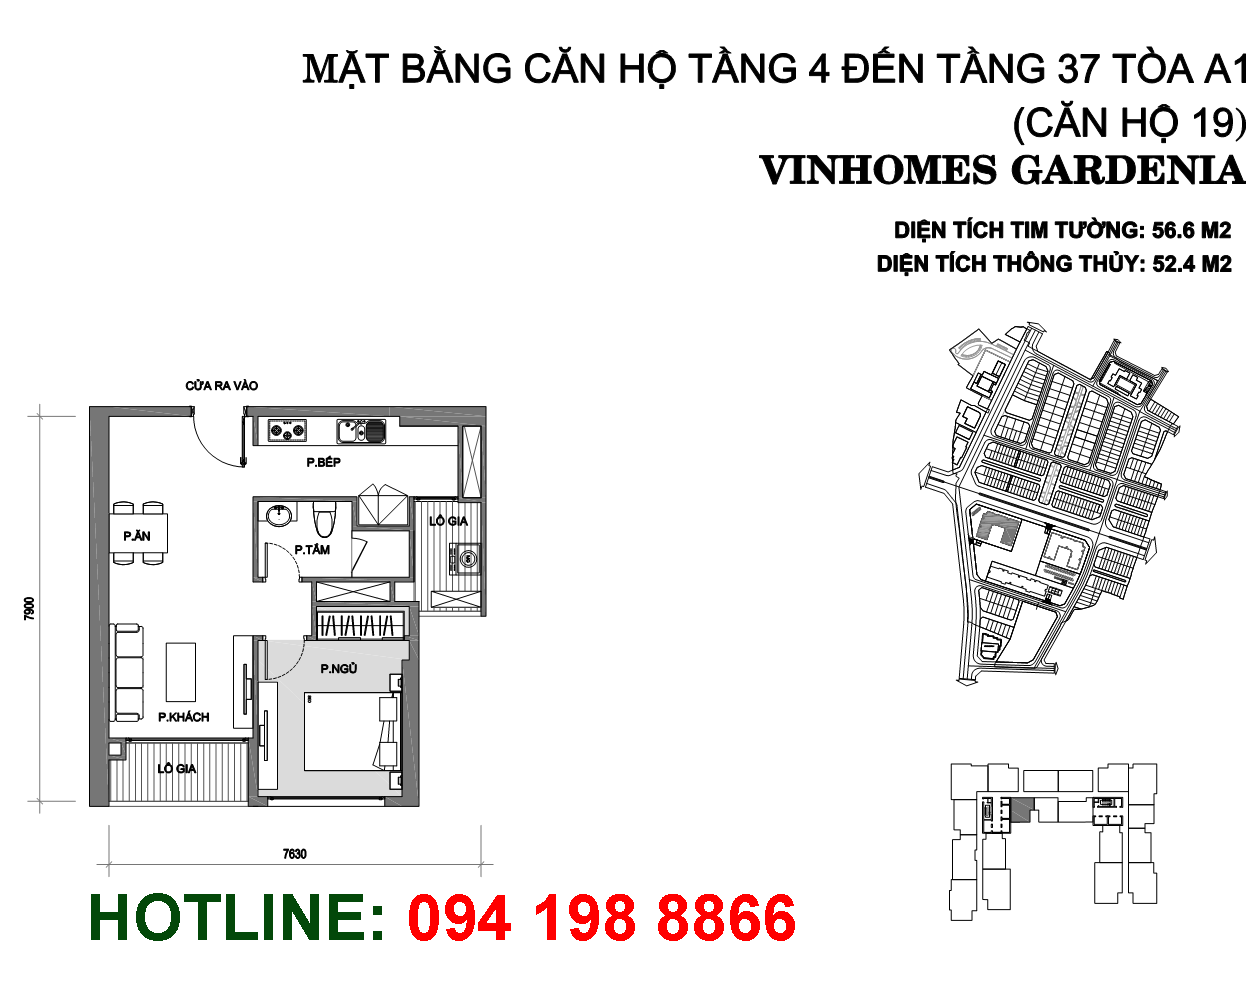 mat-bang-can-ho-A119-vinhomes-gardenia